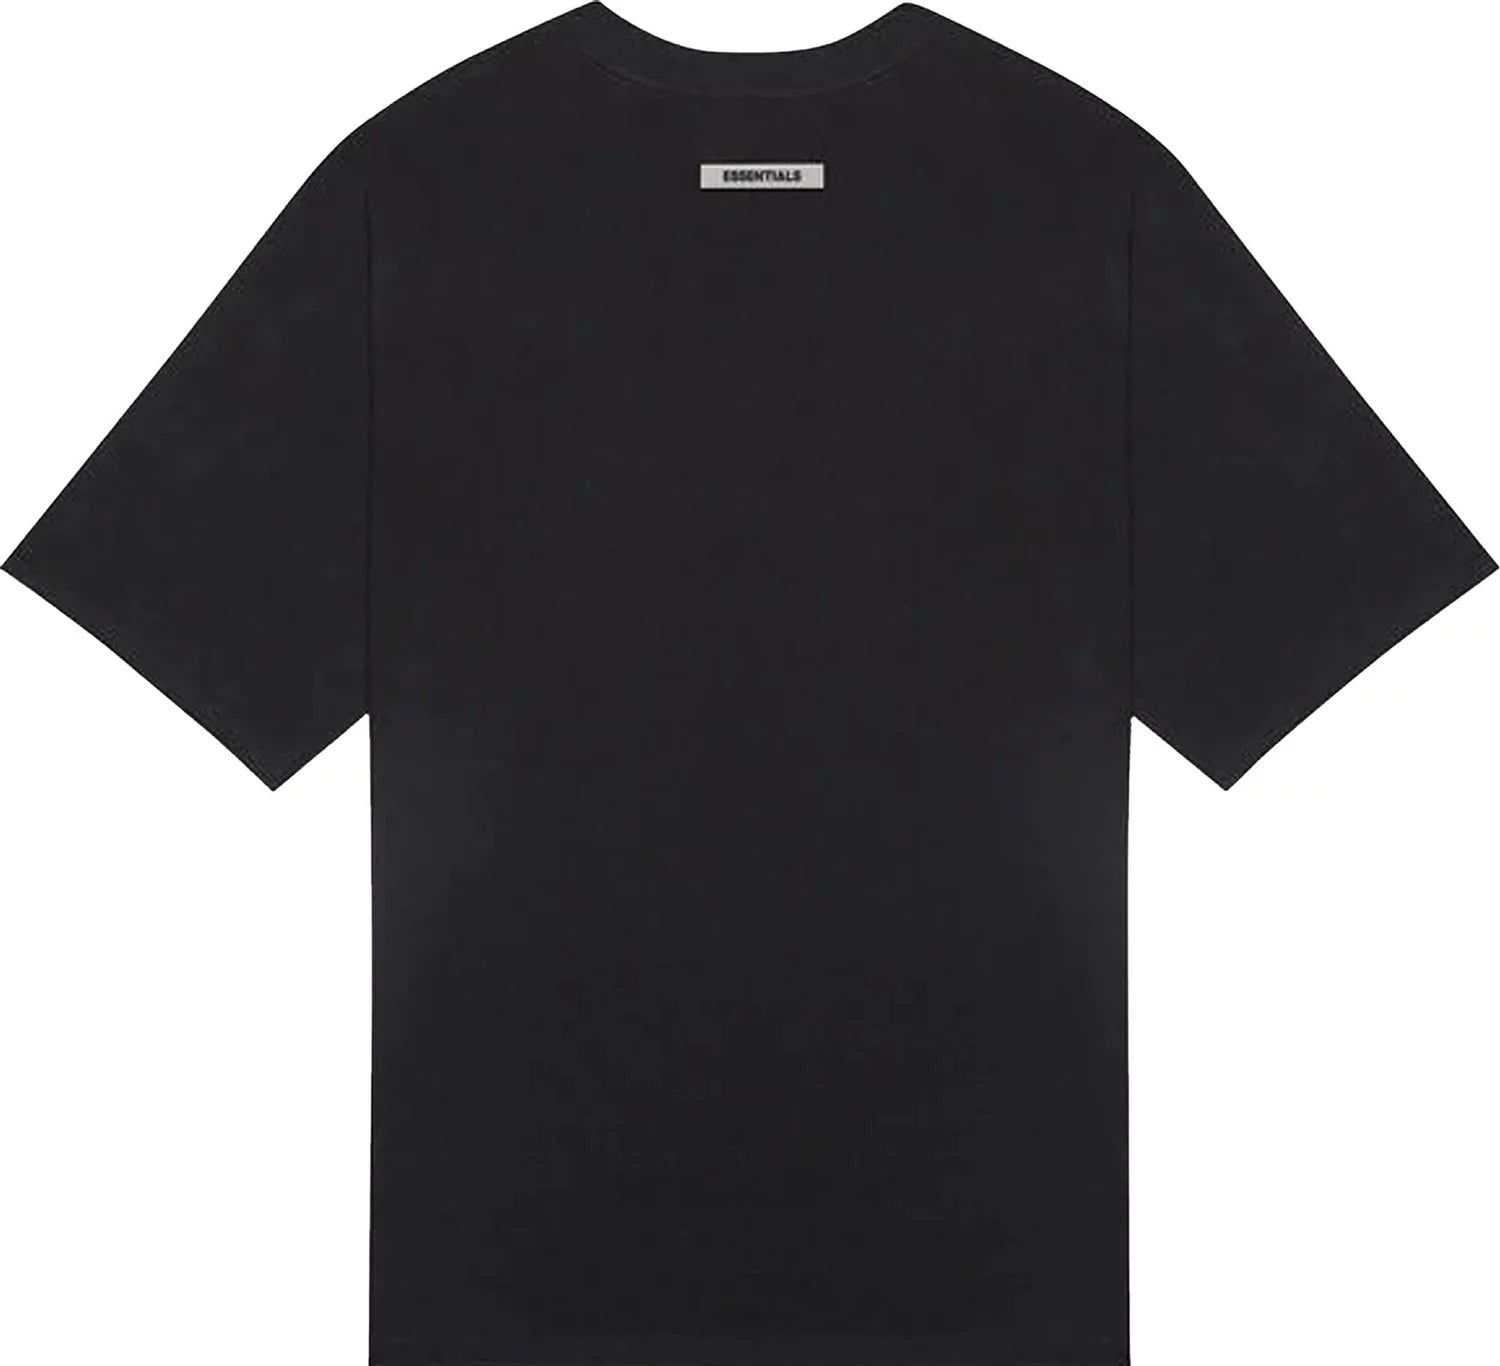 Fear of God Essentials Appliqué T-Shirt Black - Sneakersbe Sneakers Sale Online